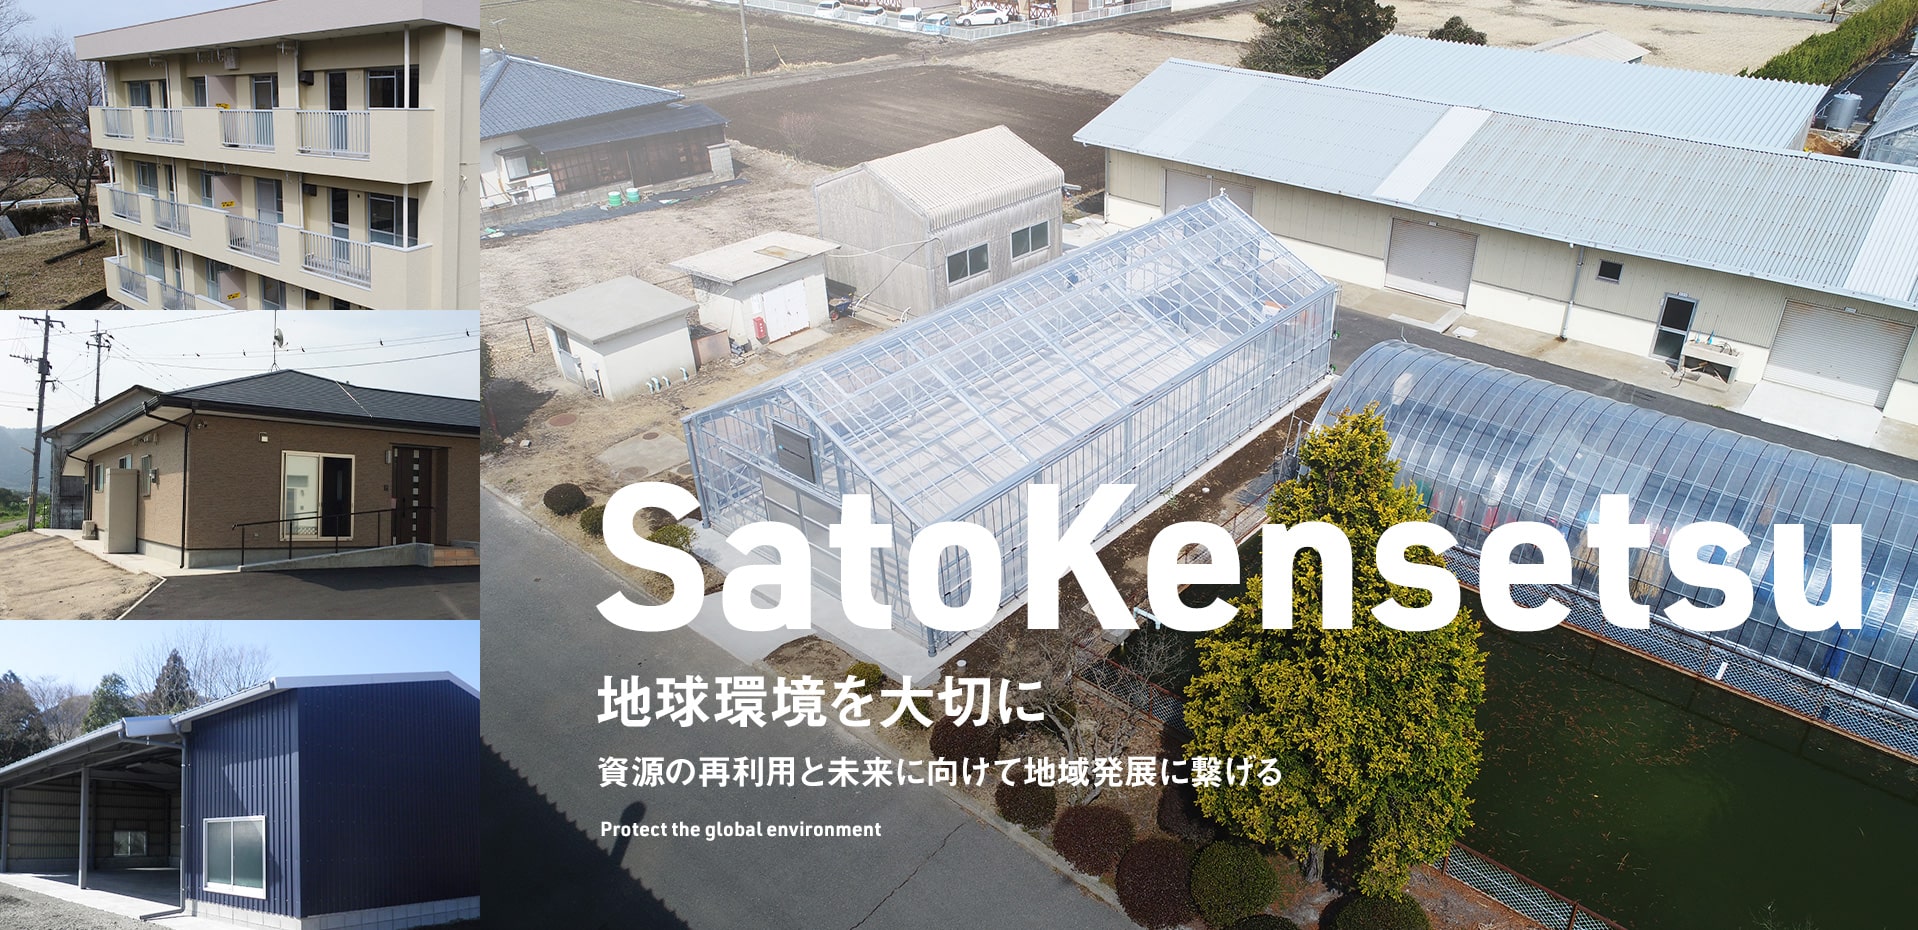 Sayo Kensetsu 地球環境を大切に 資源の再利用と未来に向けて地域発展に繋げる